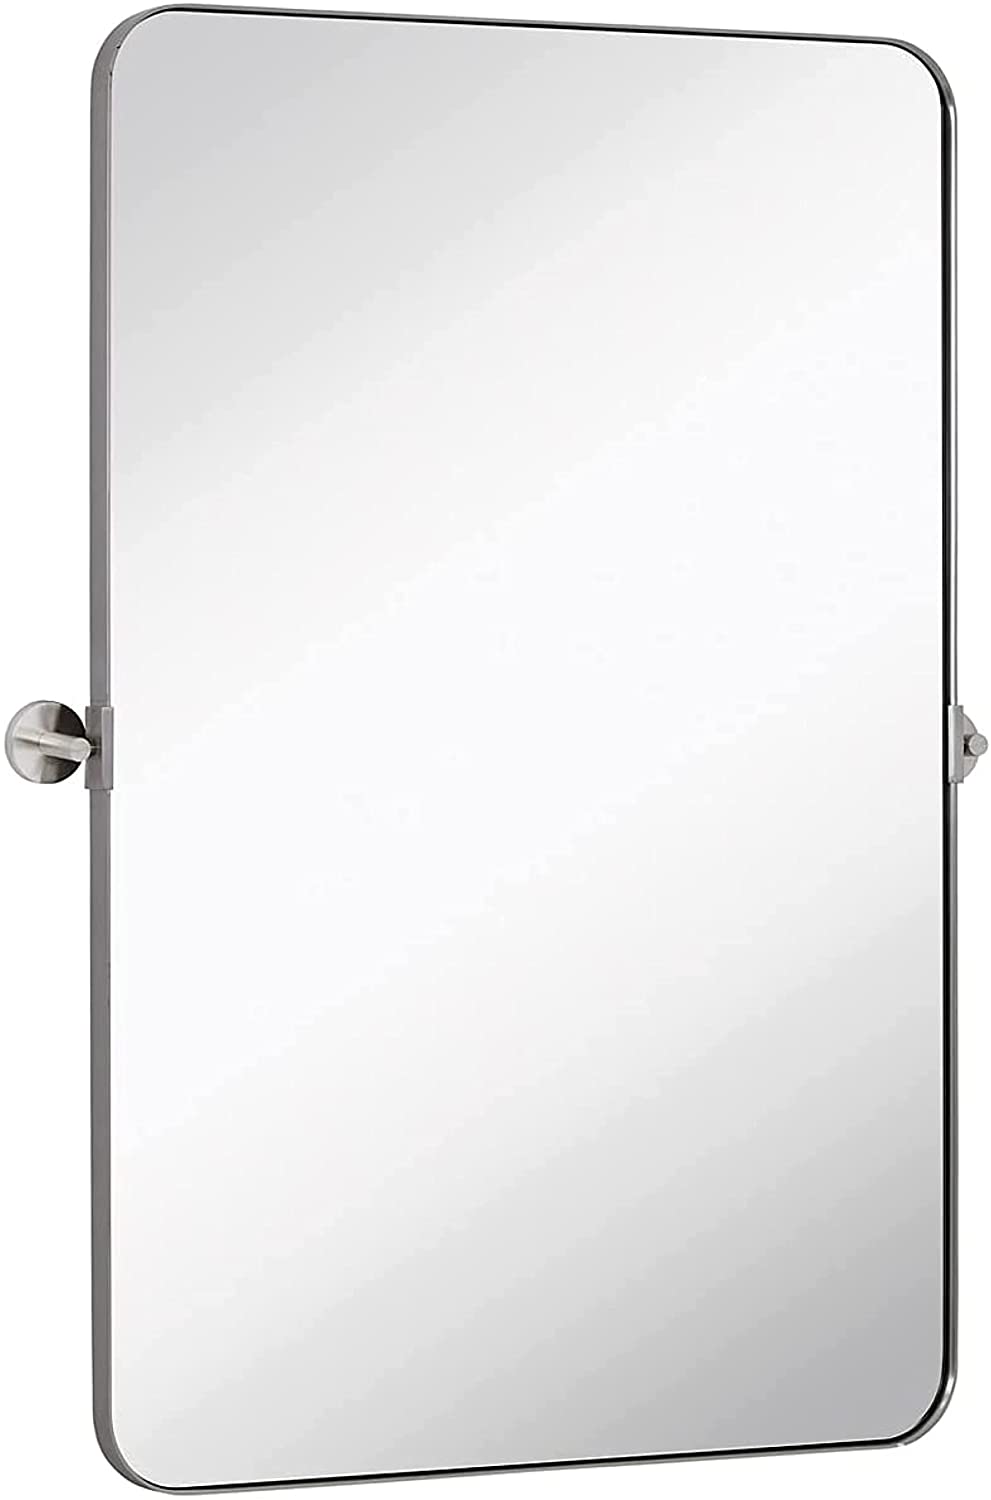 Pivot Mirror: Gold Metal Frame, Adjustable & Tilting